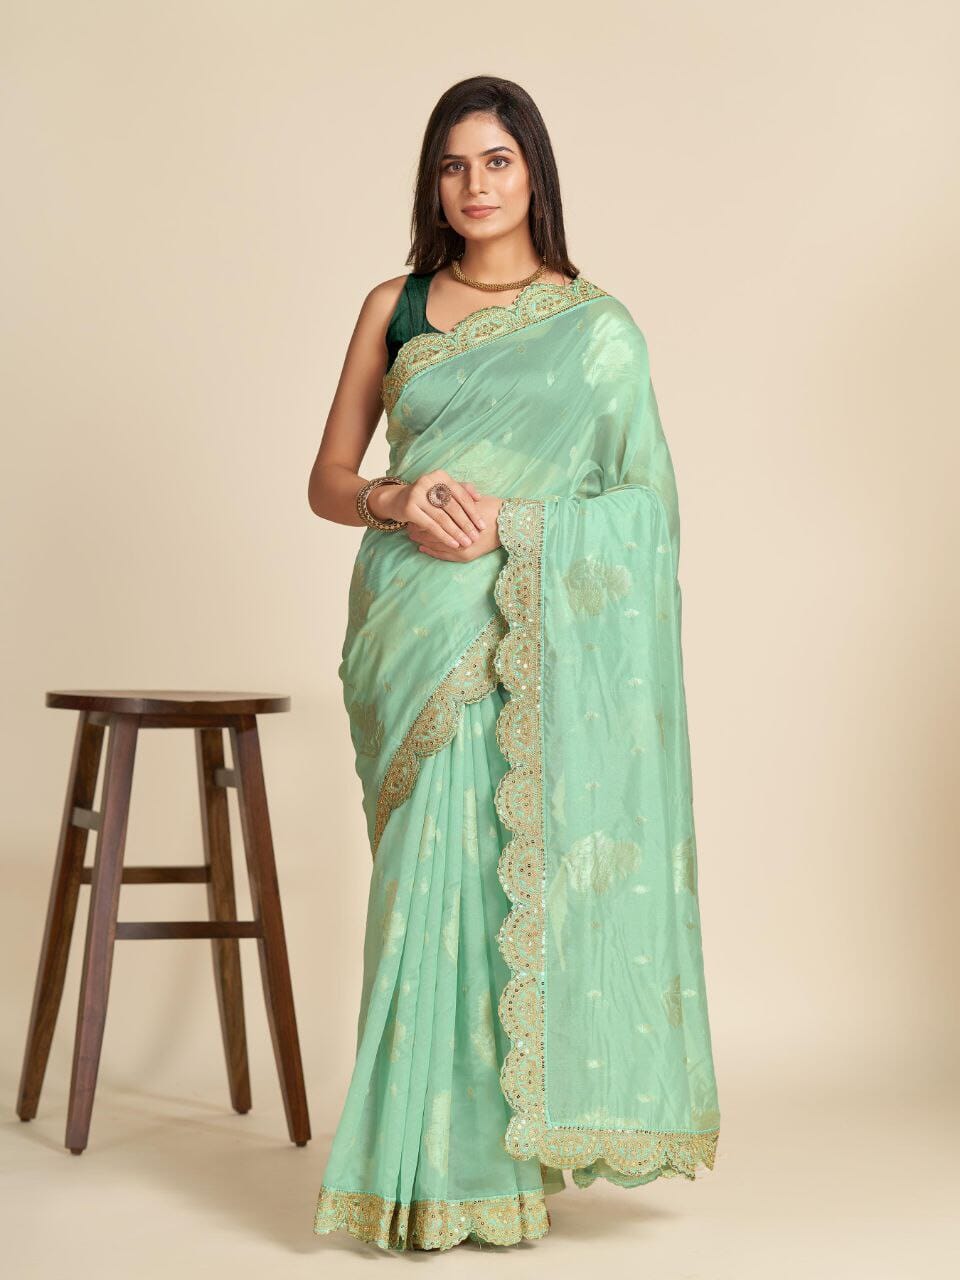 Soft Weaving Organza with Embroidered Border and Banglori Silk Blouse in 4 colors Designer Saree Shopin Di Apparels 